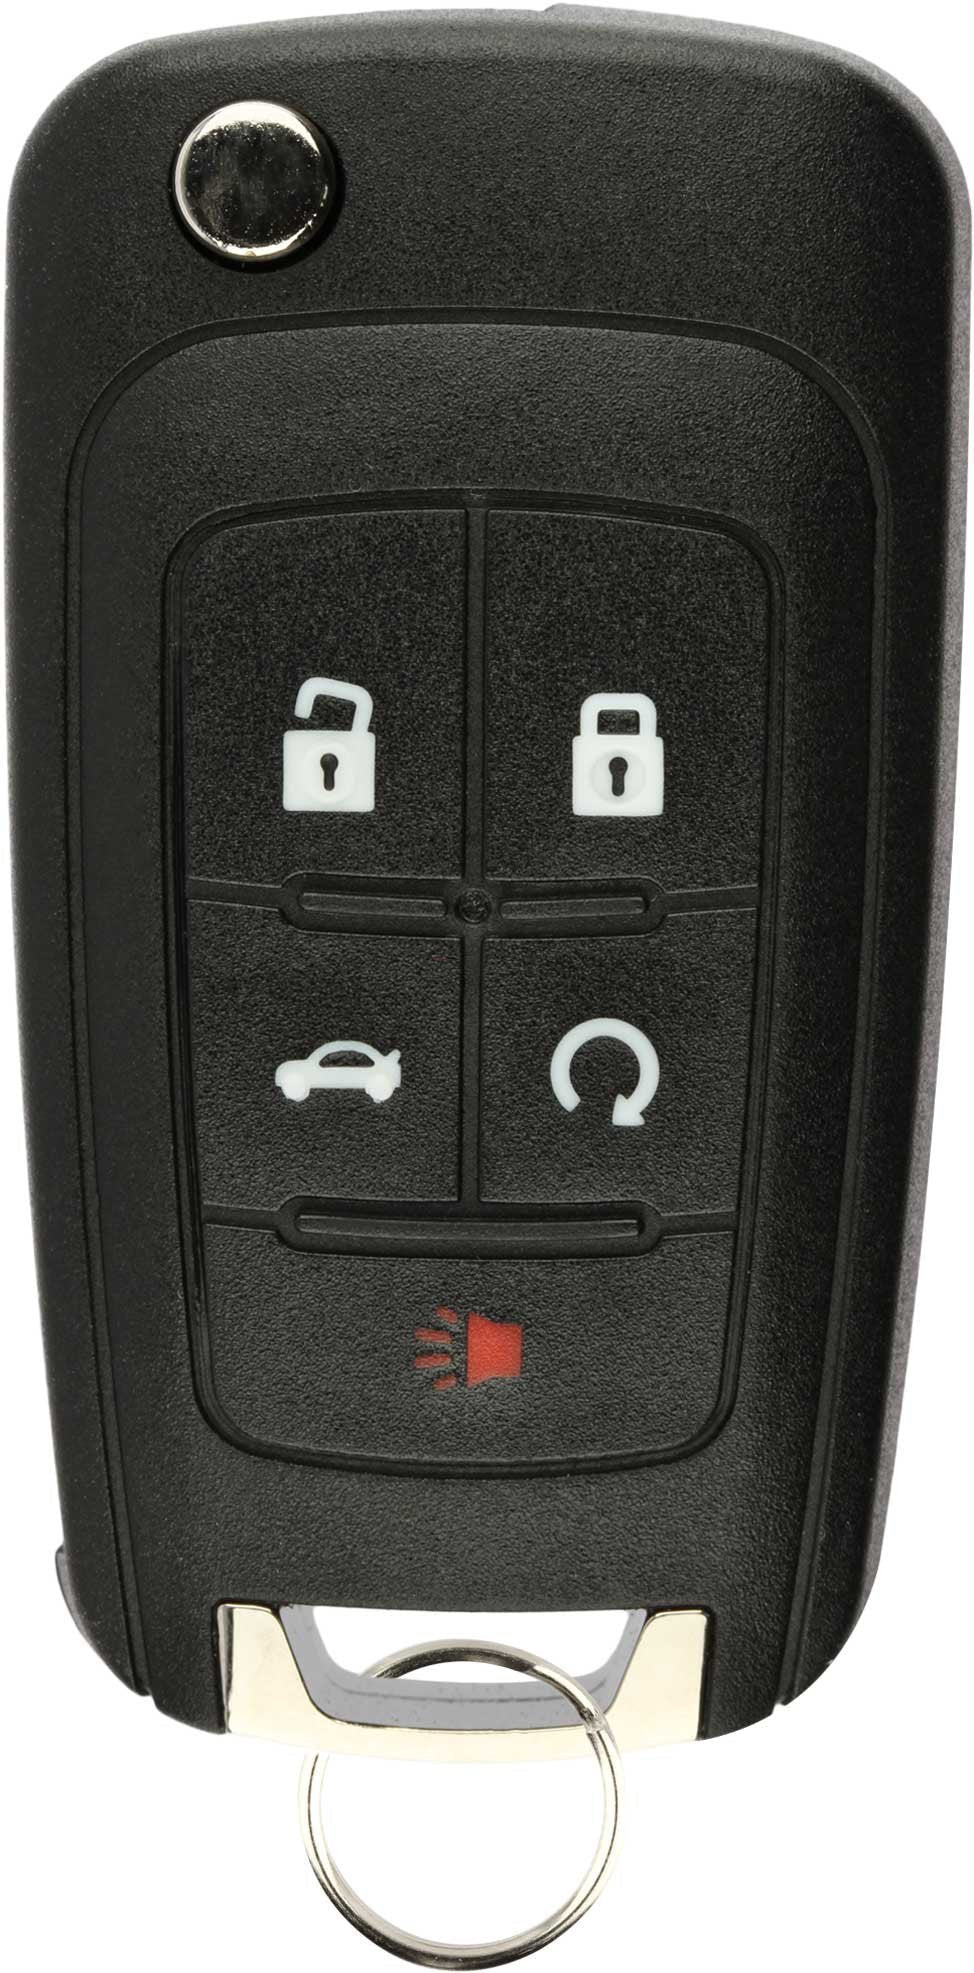  [AUSTRALIA] - KeylessOption Keyless Entry Car Remote Uncut Flip Key Fob Replacement for Chevy Buick GMC OHT01060512